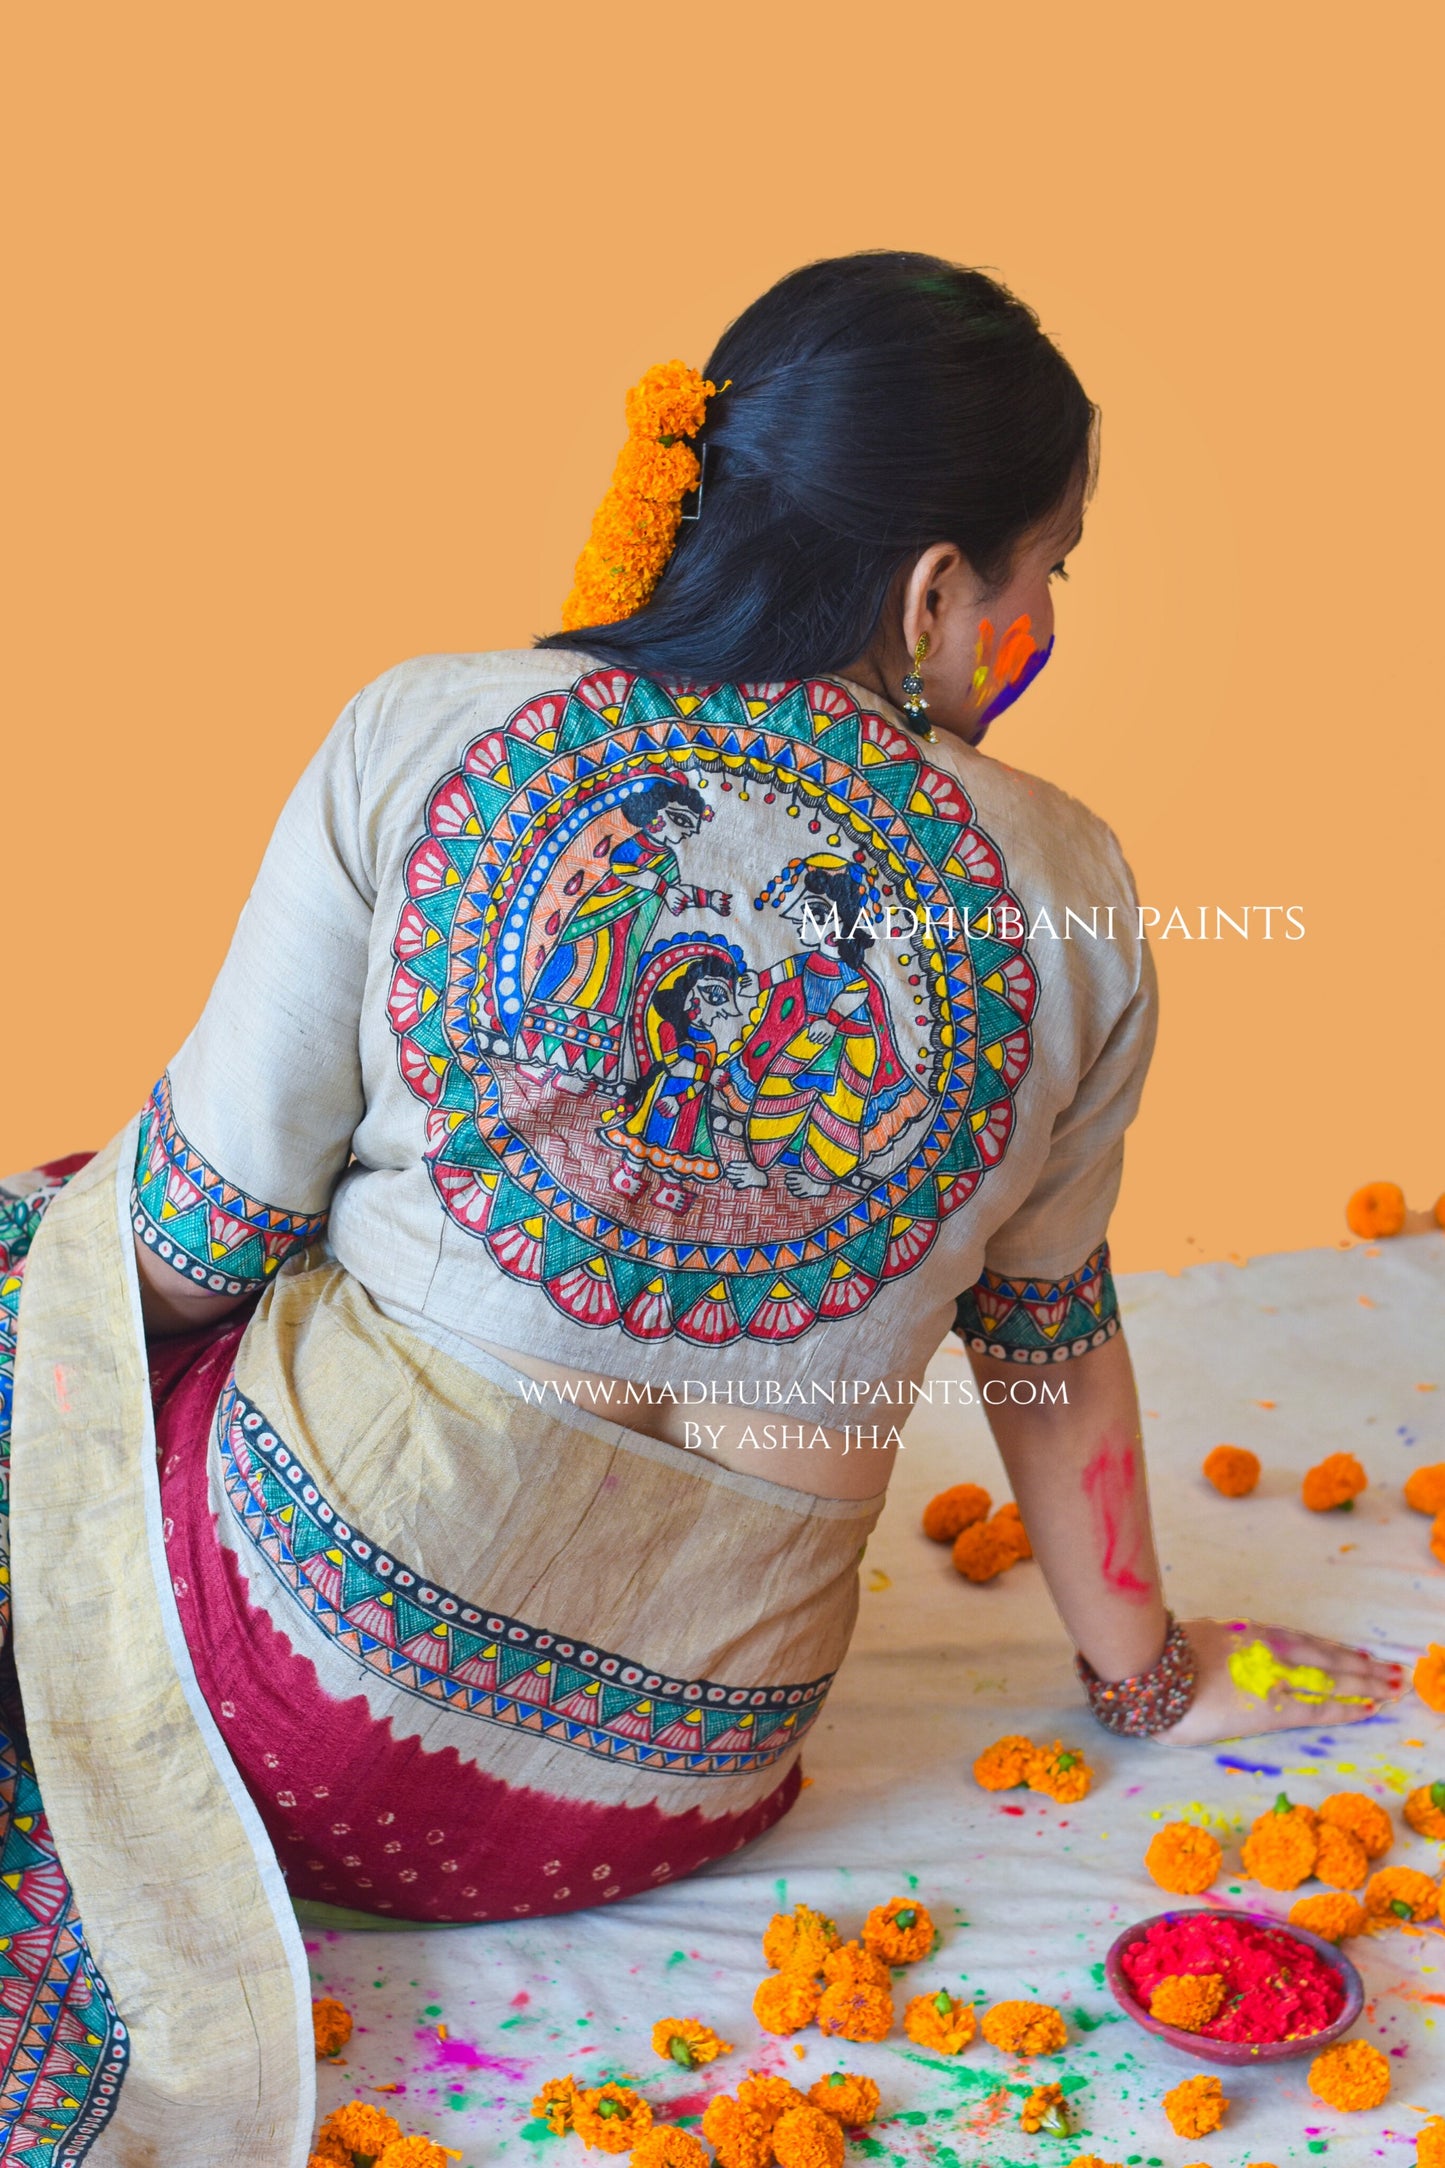 GAURI PUJA Hand-painted Madhubani Bandhini Tussar Silk Saree Blouse Set